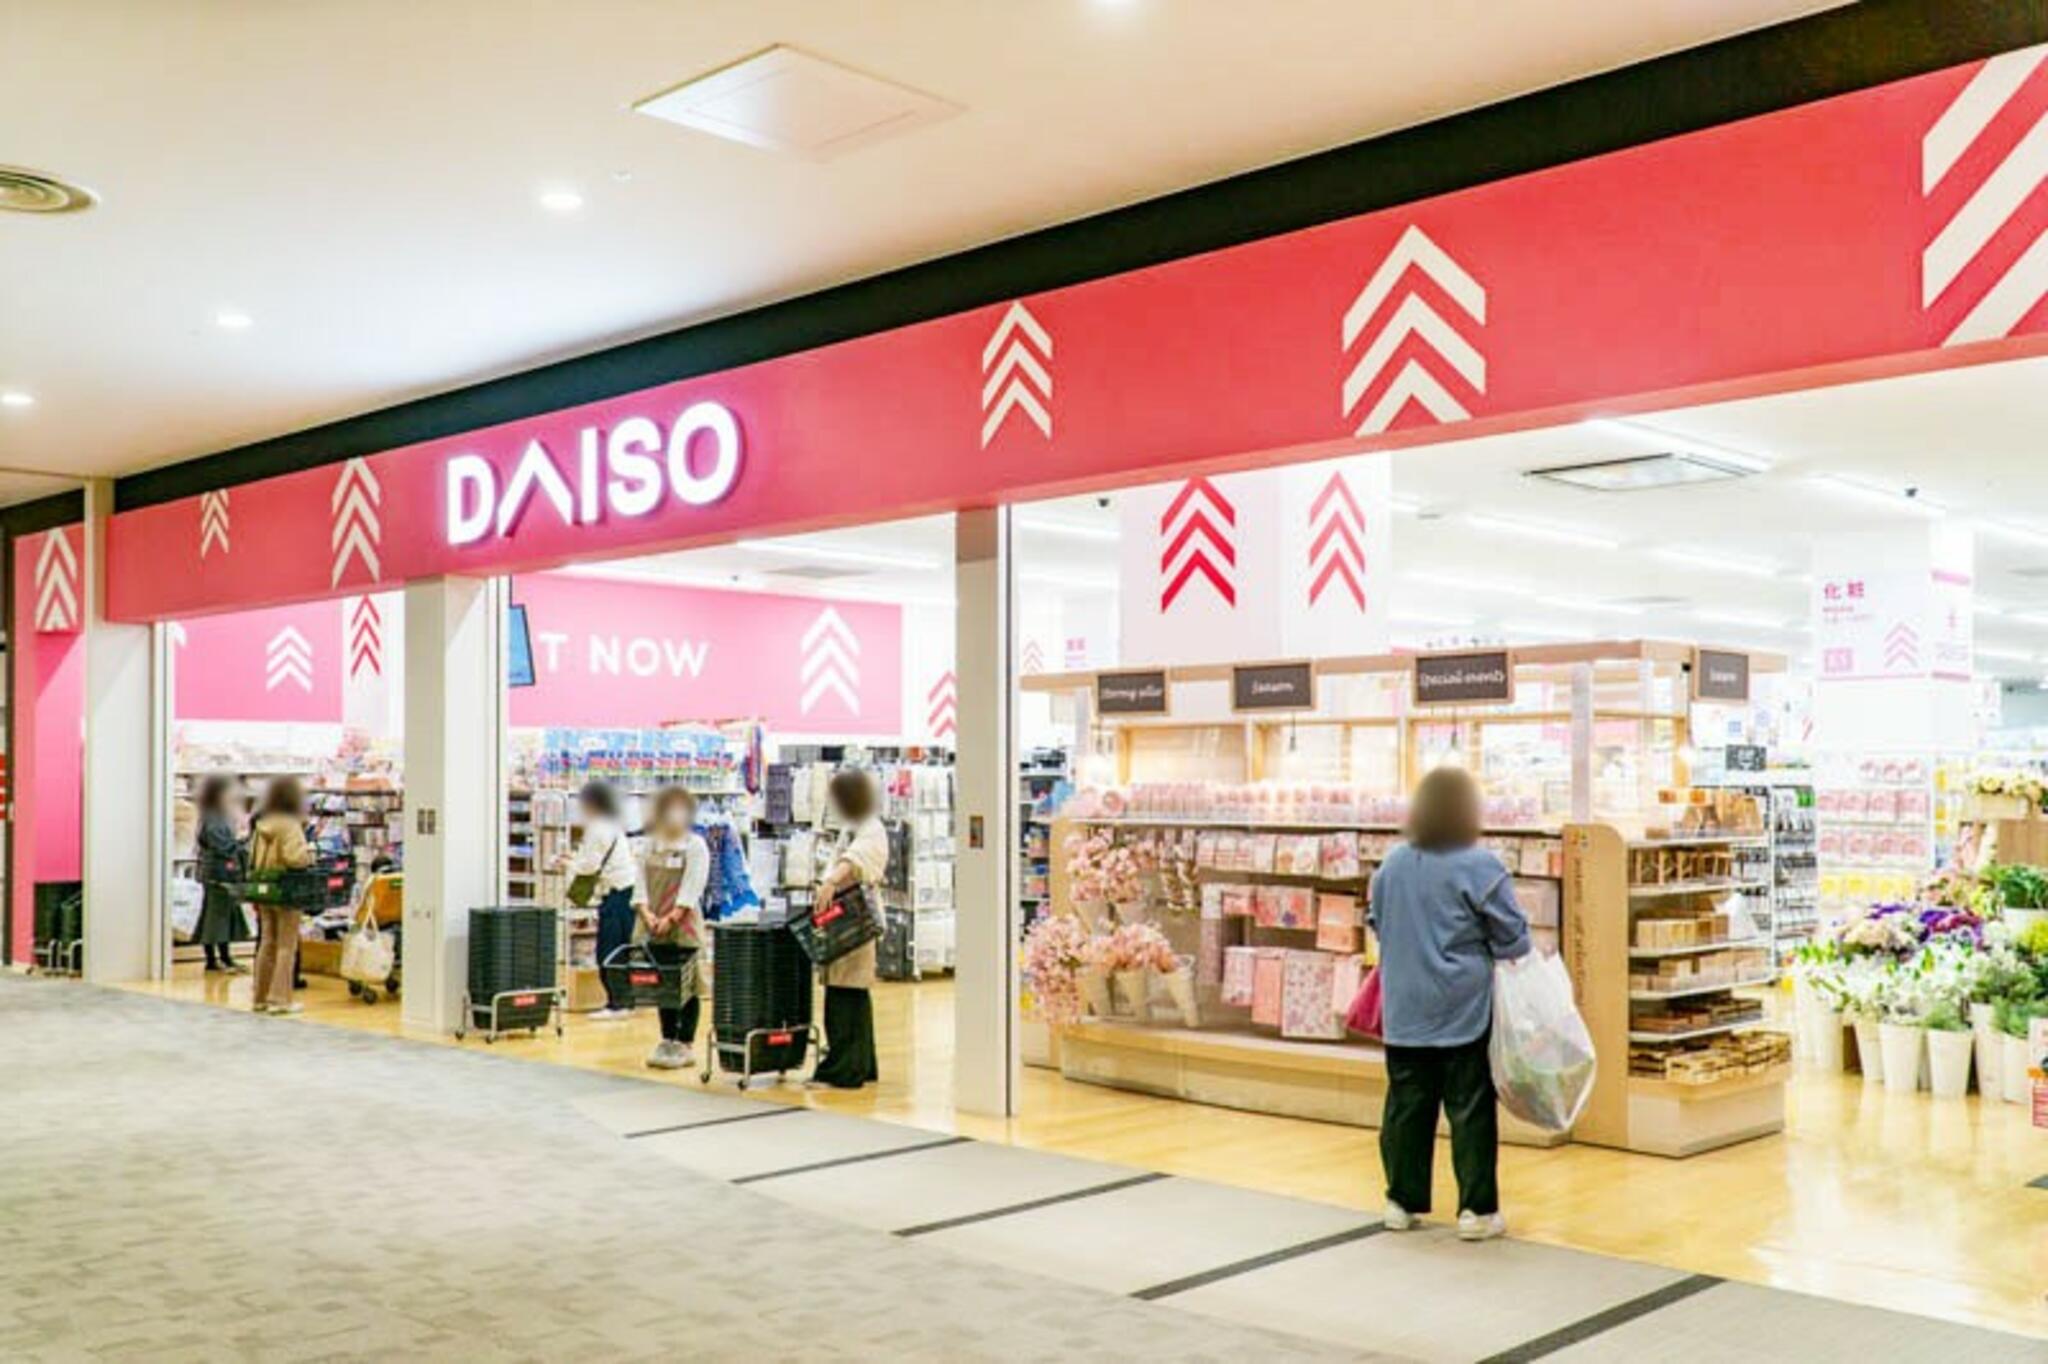 DAISO イオンモール四條畷店の代表写真8